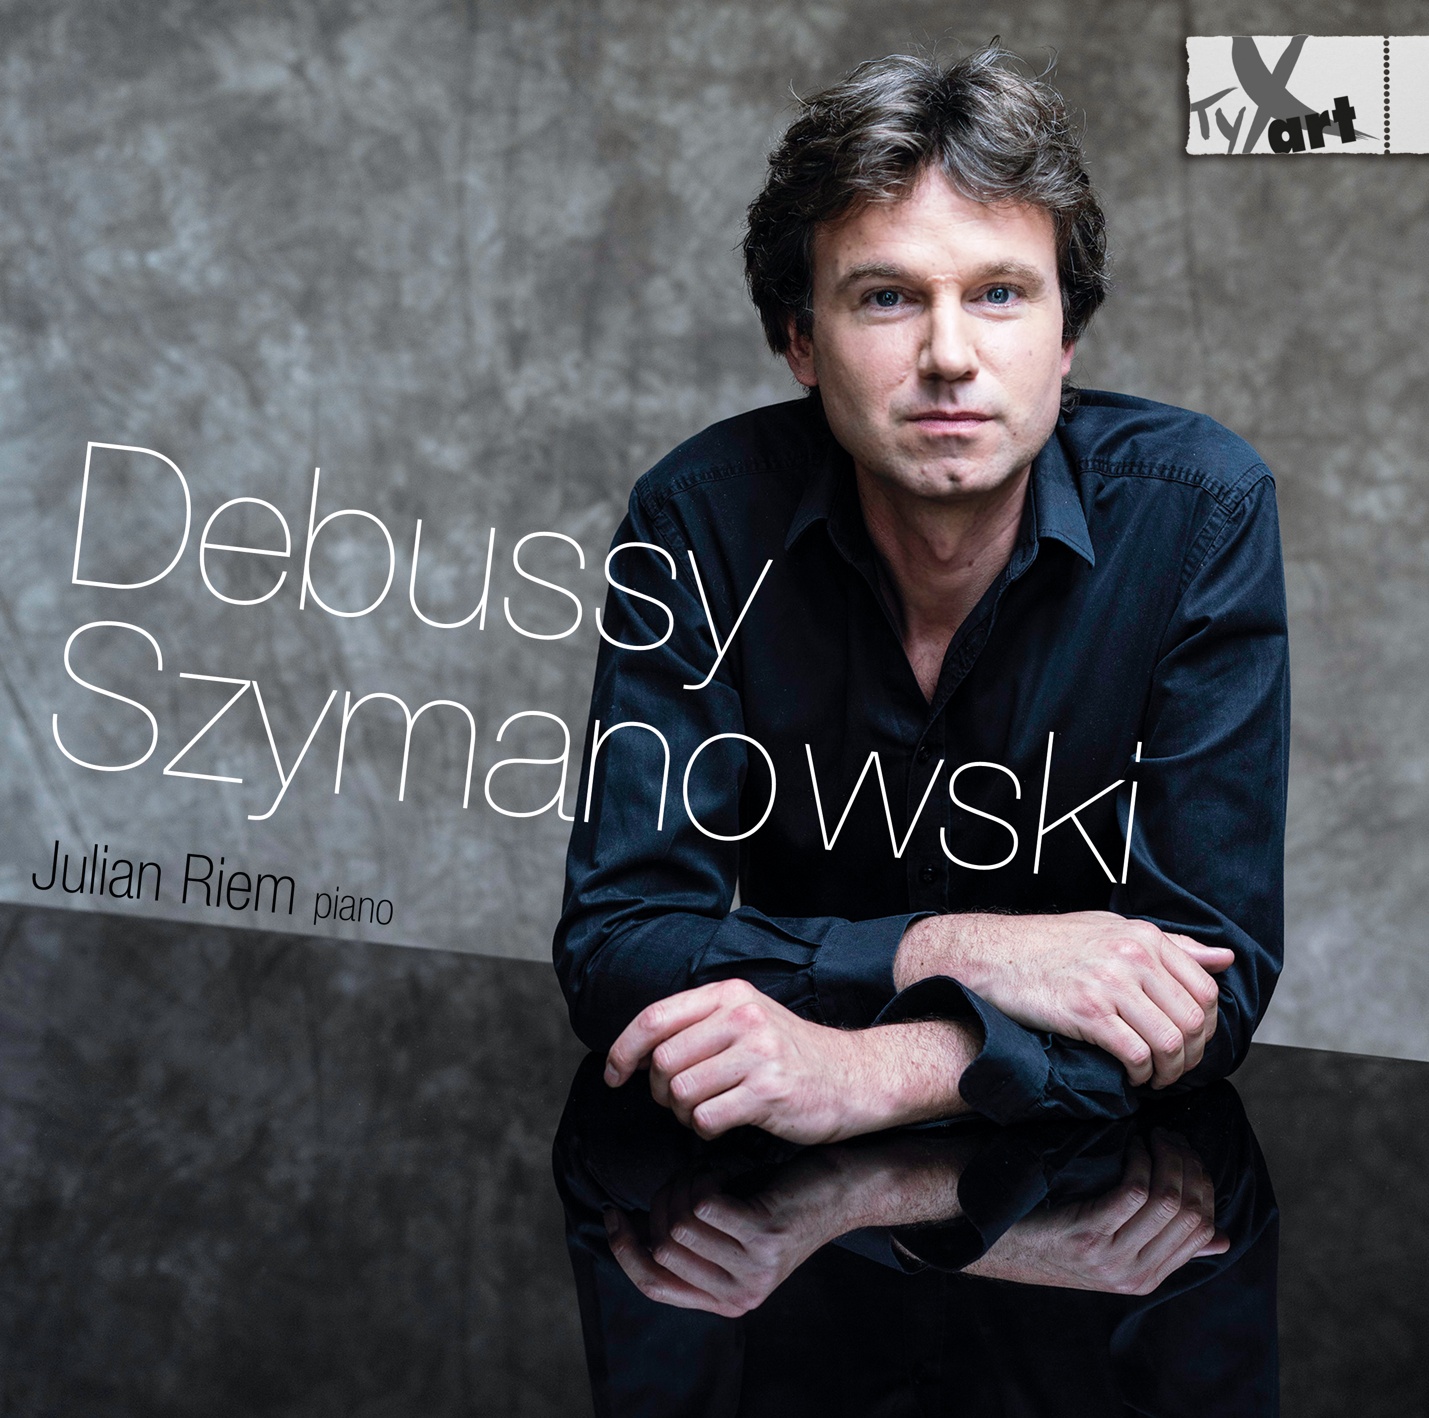 Debussy & Szymanowski: Etudes - Julian Riem, Klavier